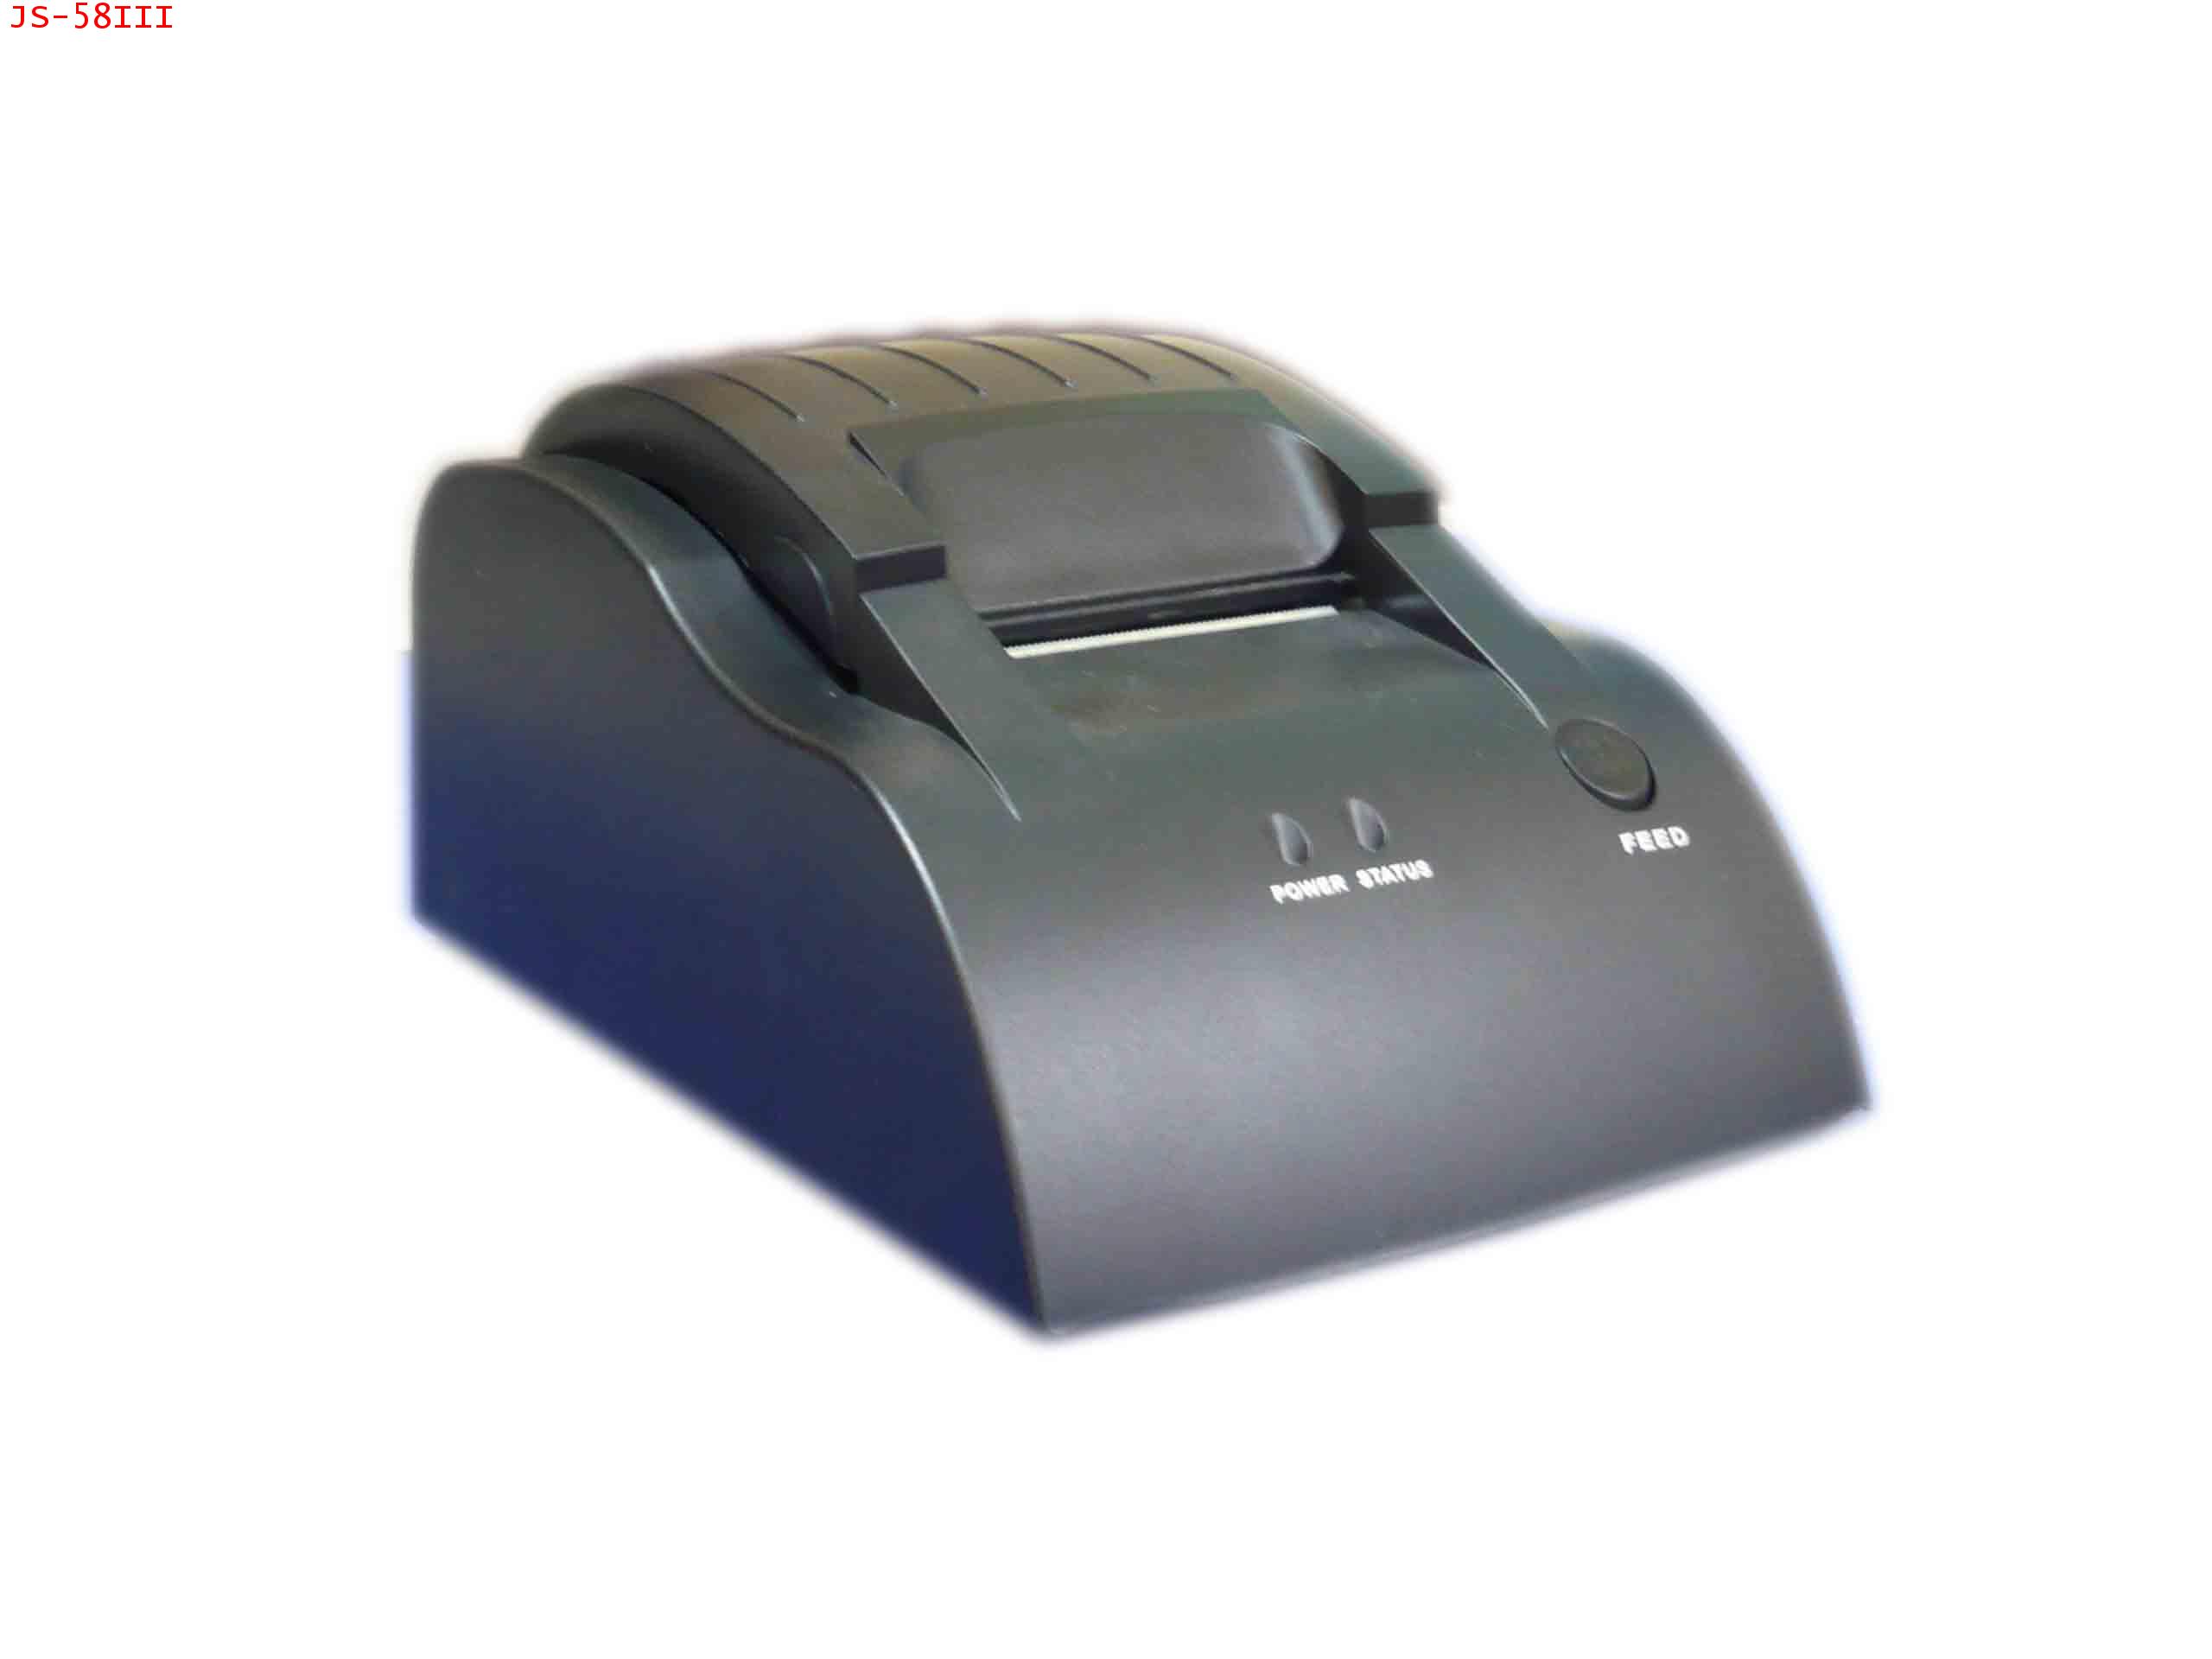 Thermal receipt printer JS-58III 1